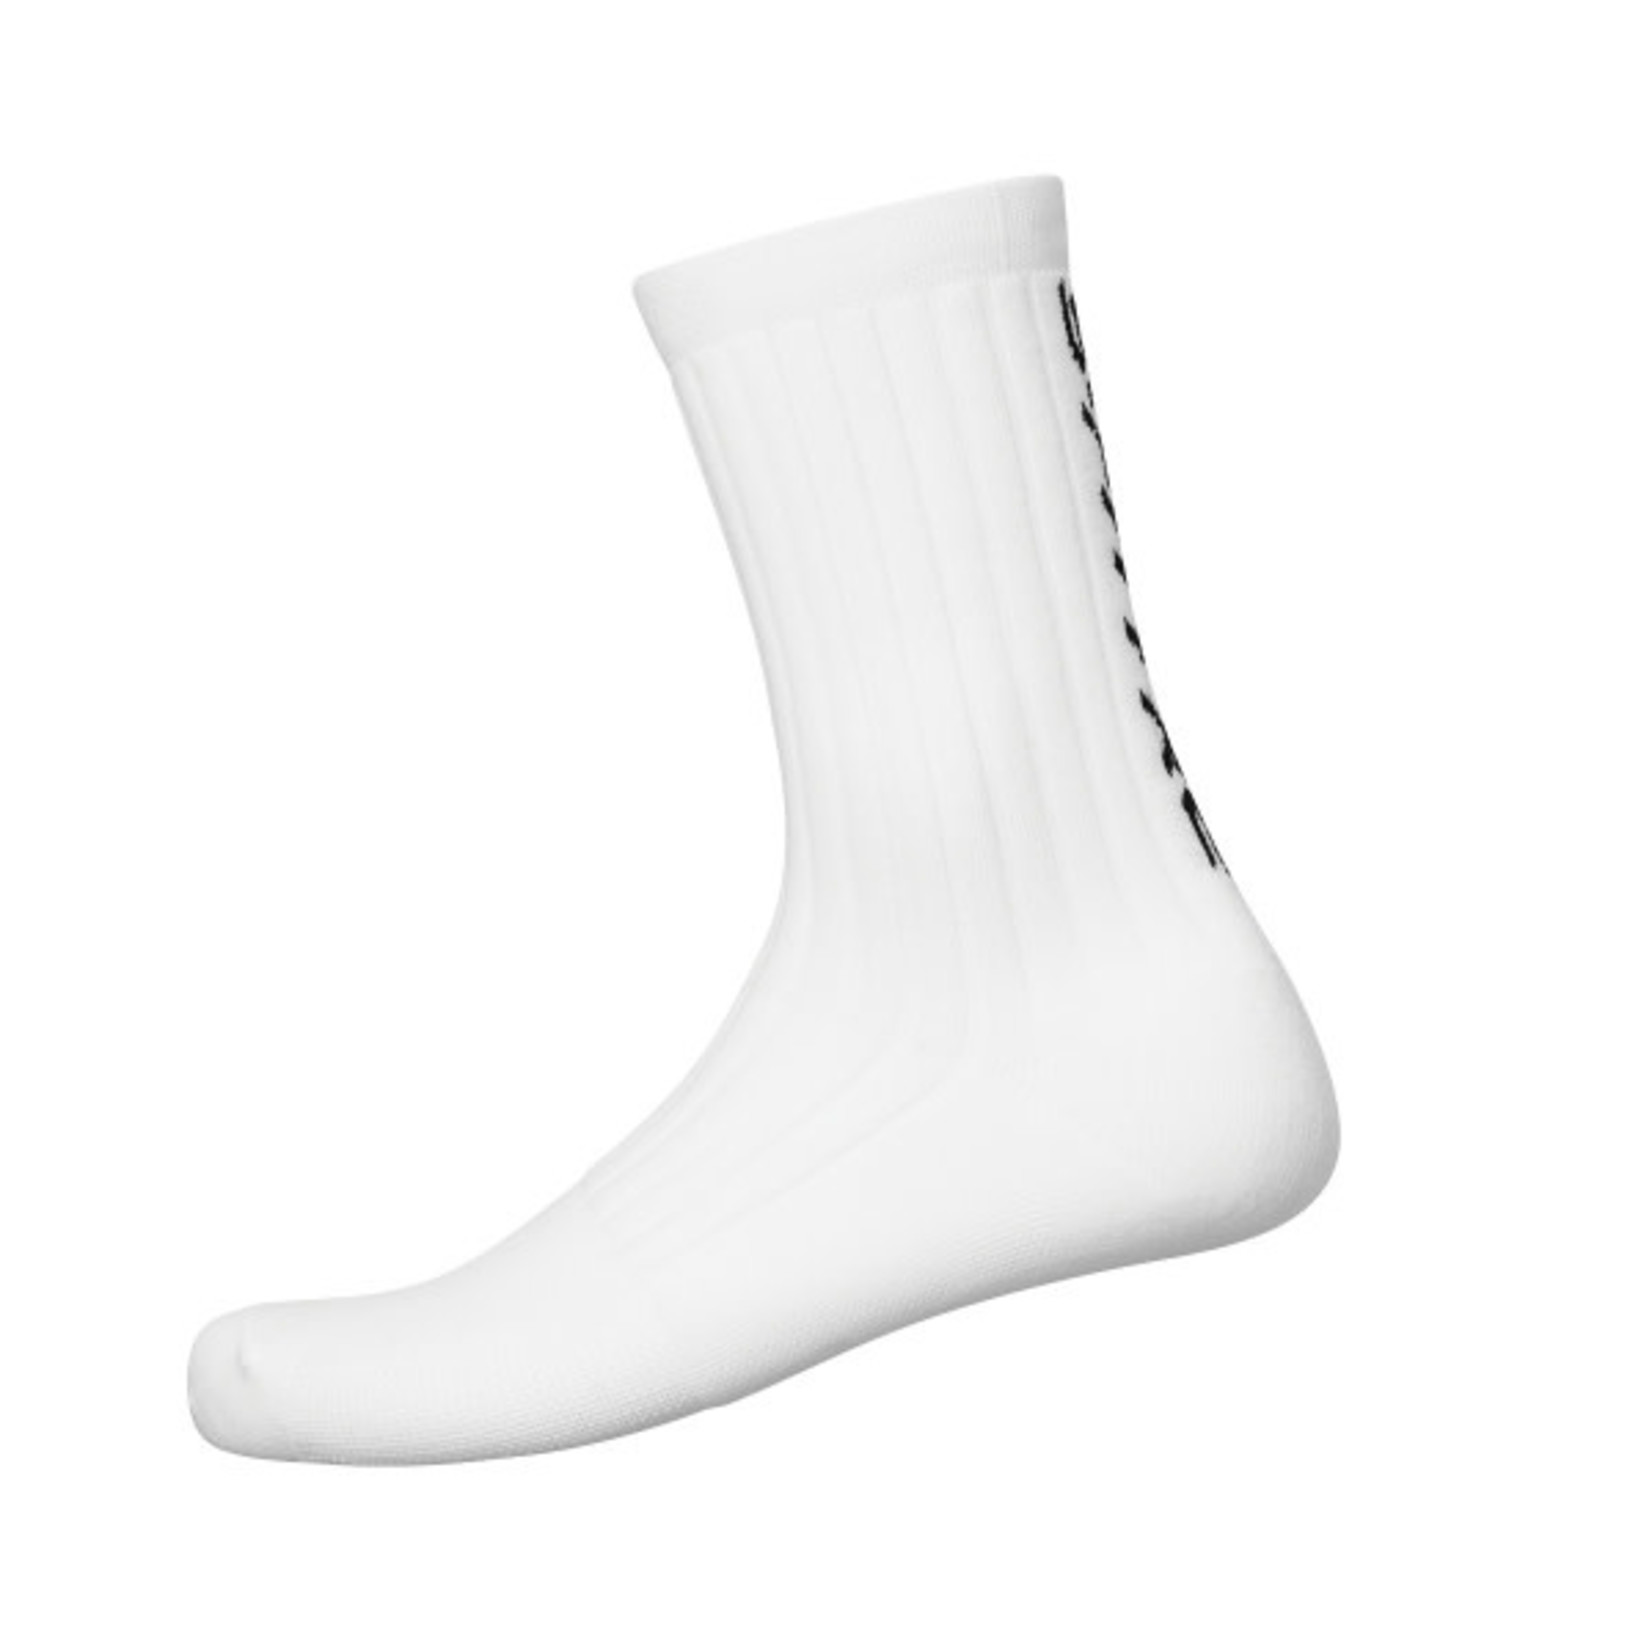 Shimano Shimano S-Phyre Flash Socks - White